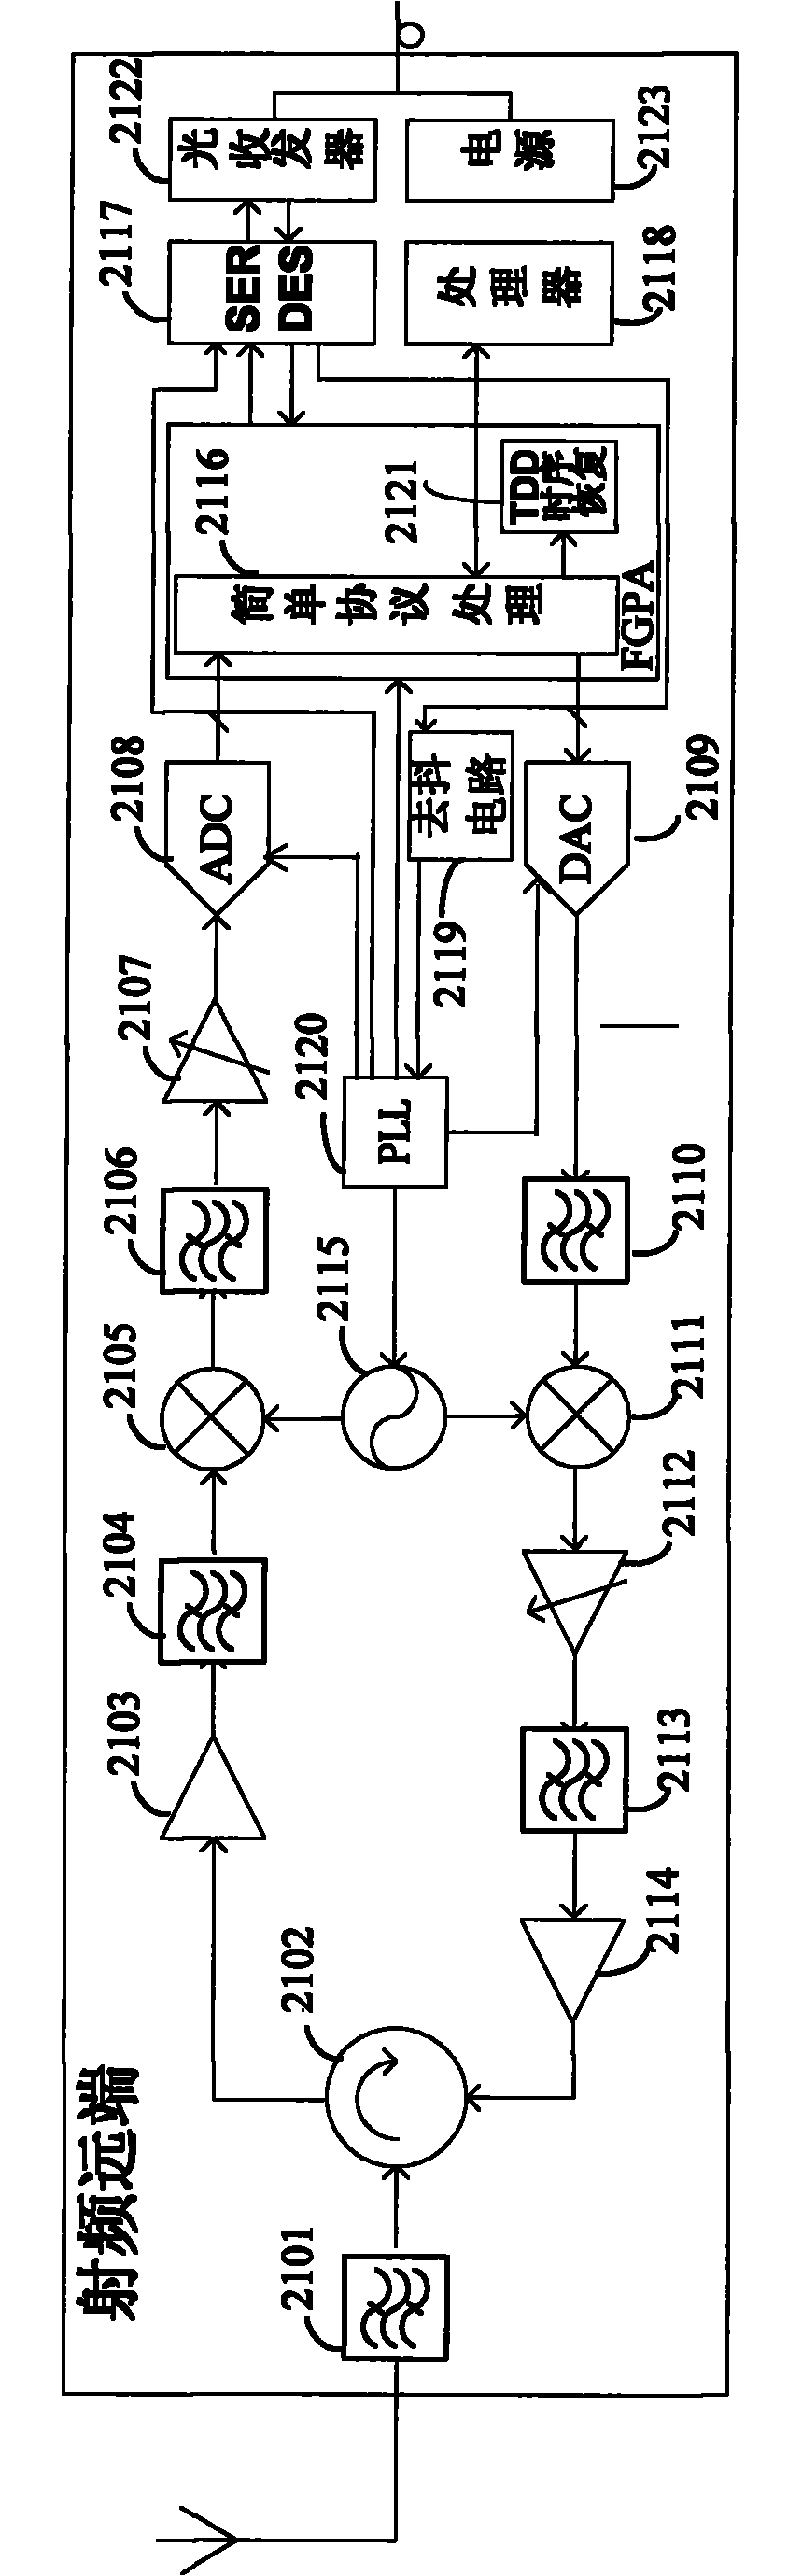 Single-antenna remote radio unit